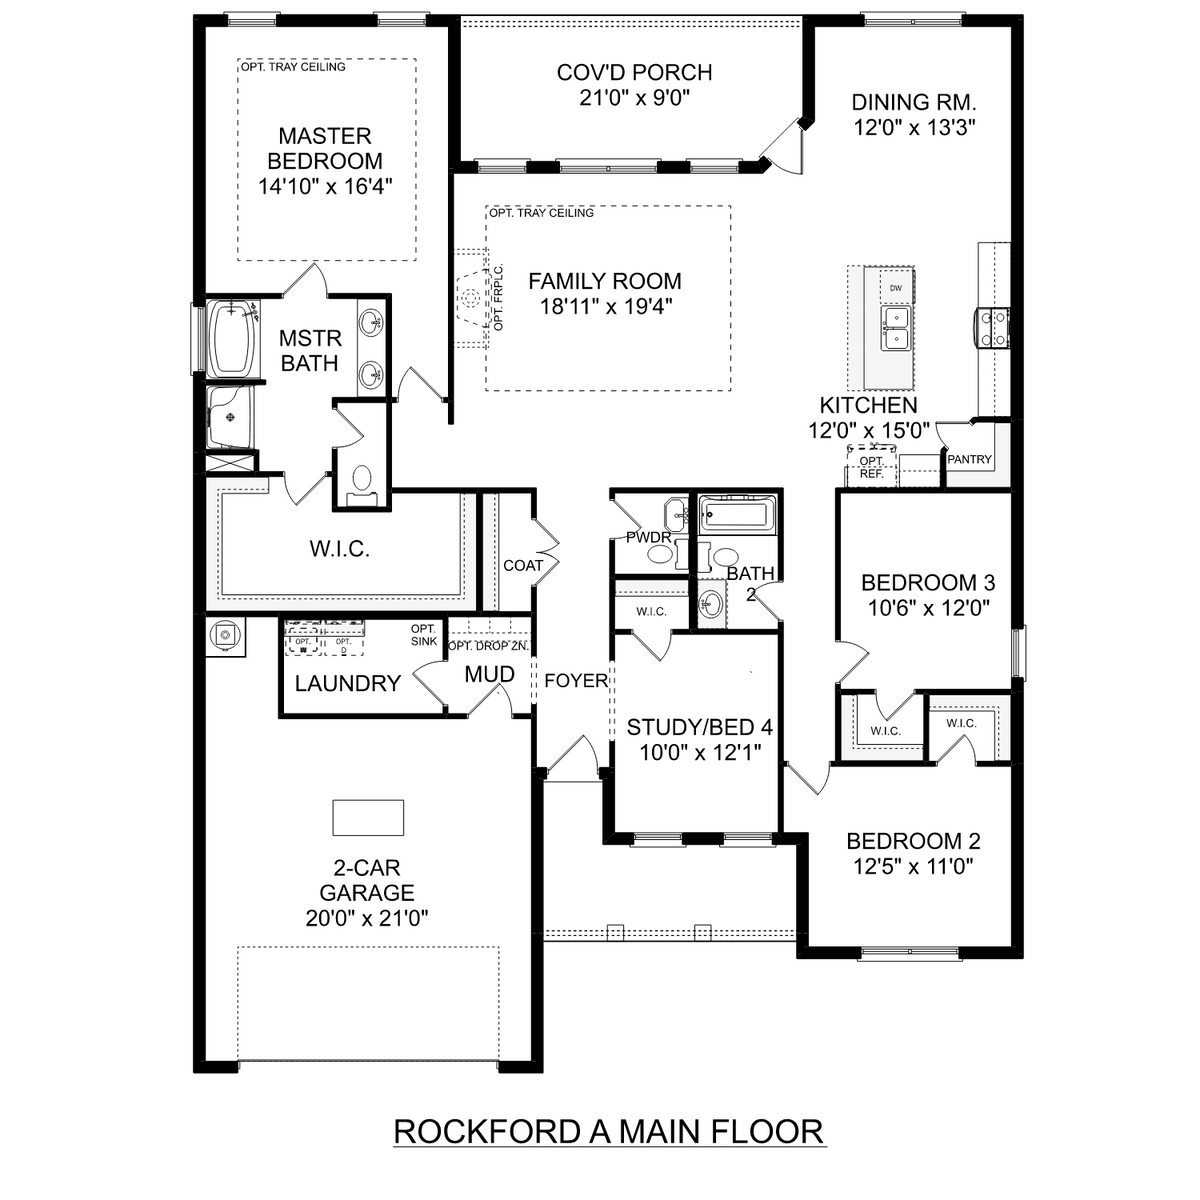 1 - The Rockford floor plan layout for 2113 Brandon Drive in Davidson Homes' North Ridge community.